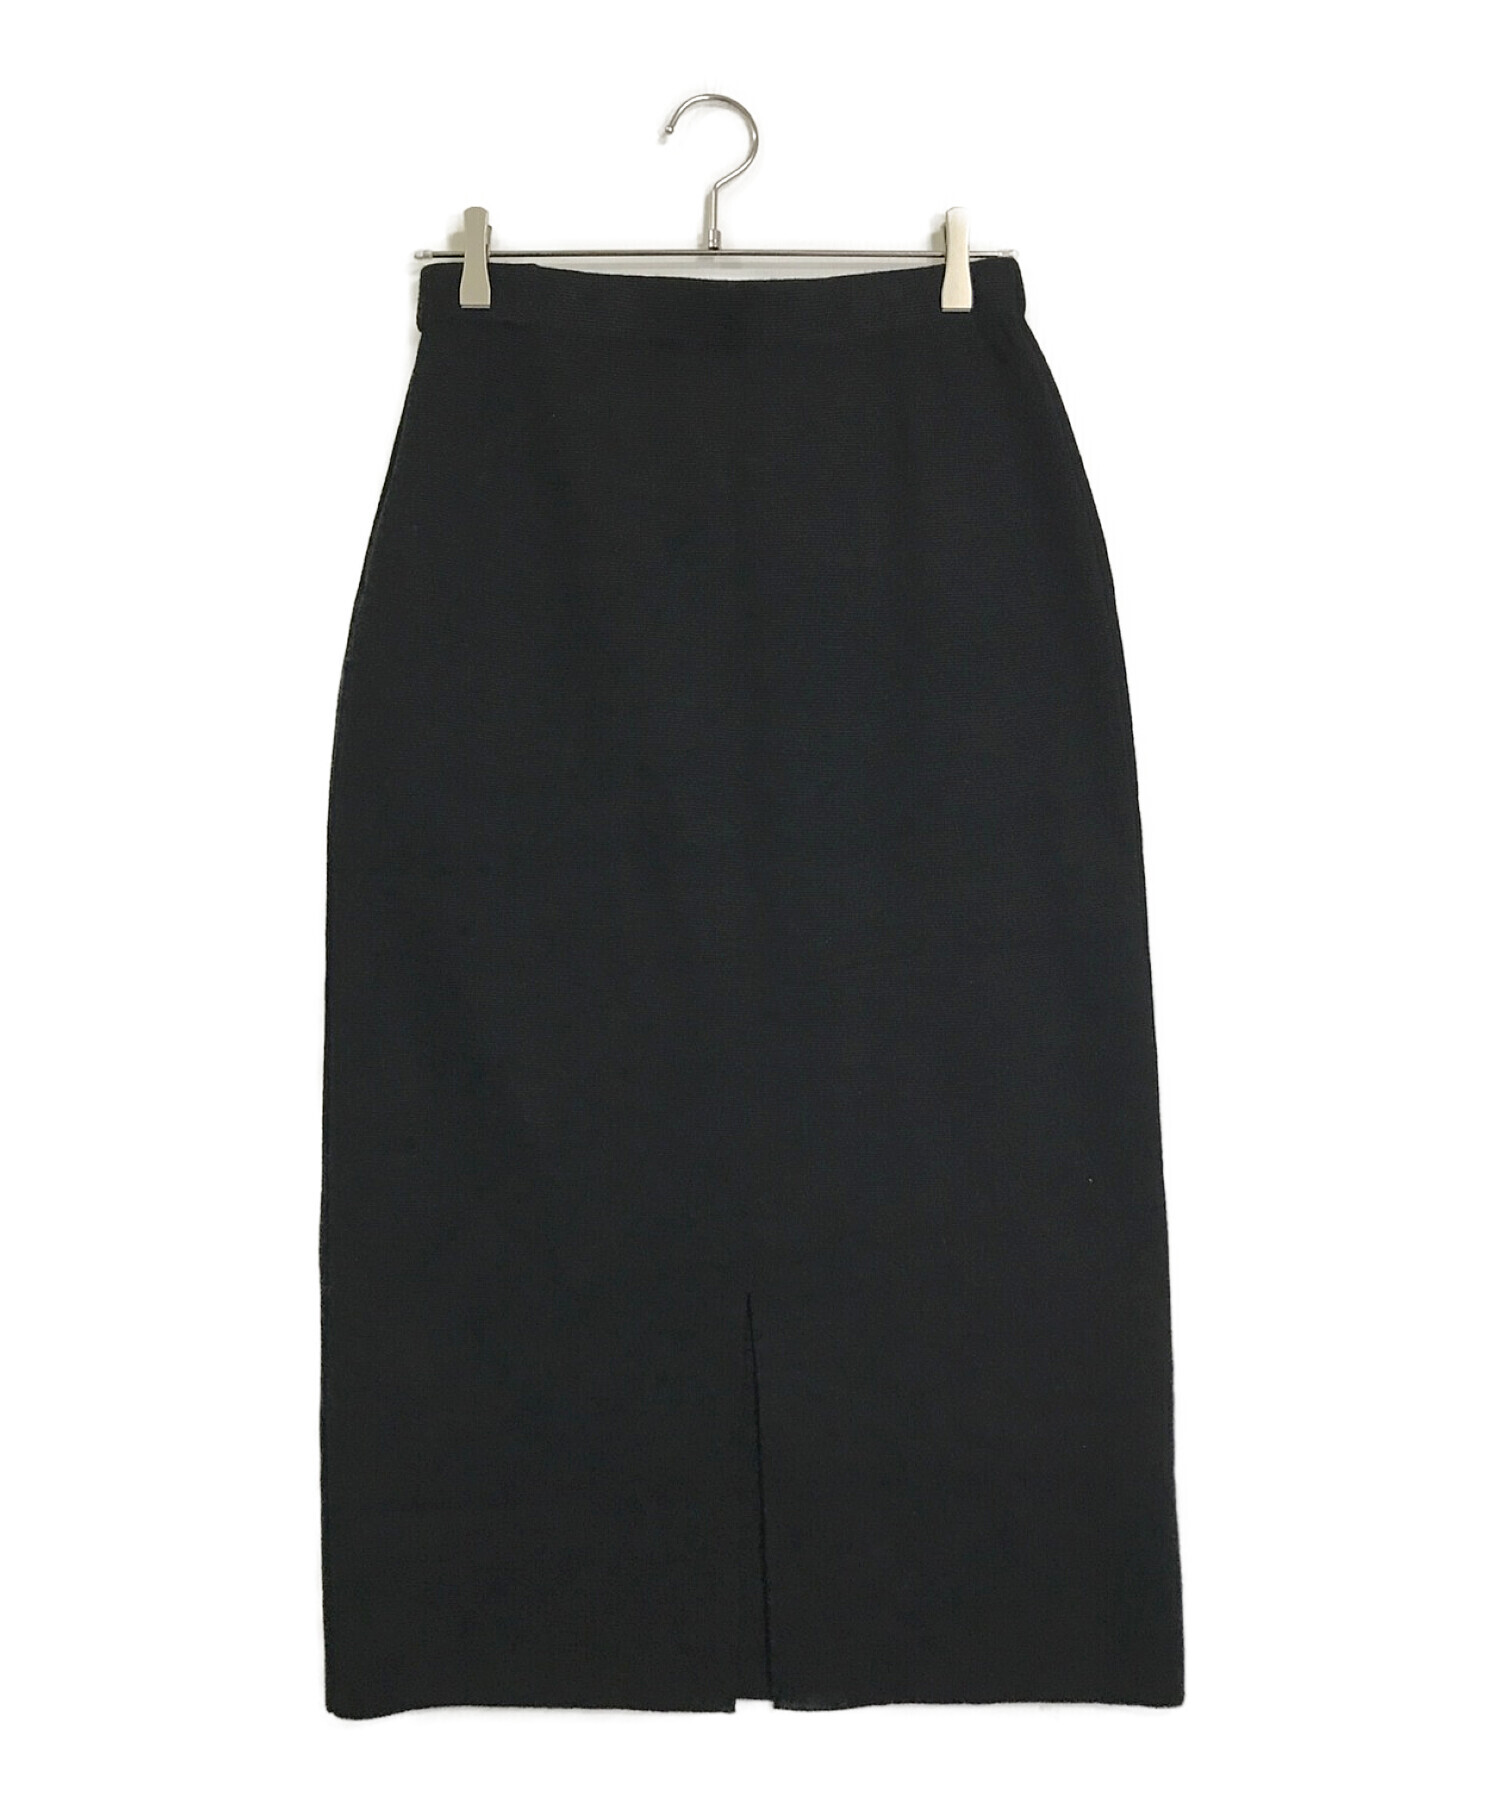 FRAMeWORK (フレームワーク) ミラノリブタイトスカート / ロングスカート ブラック サイズ:L